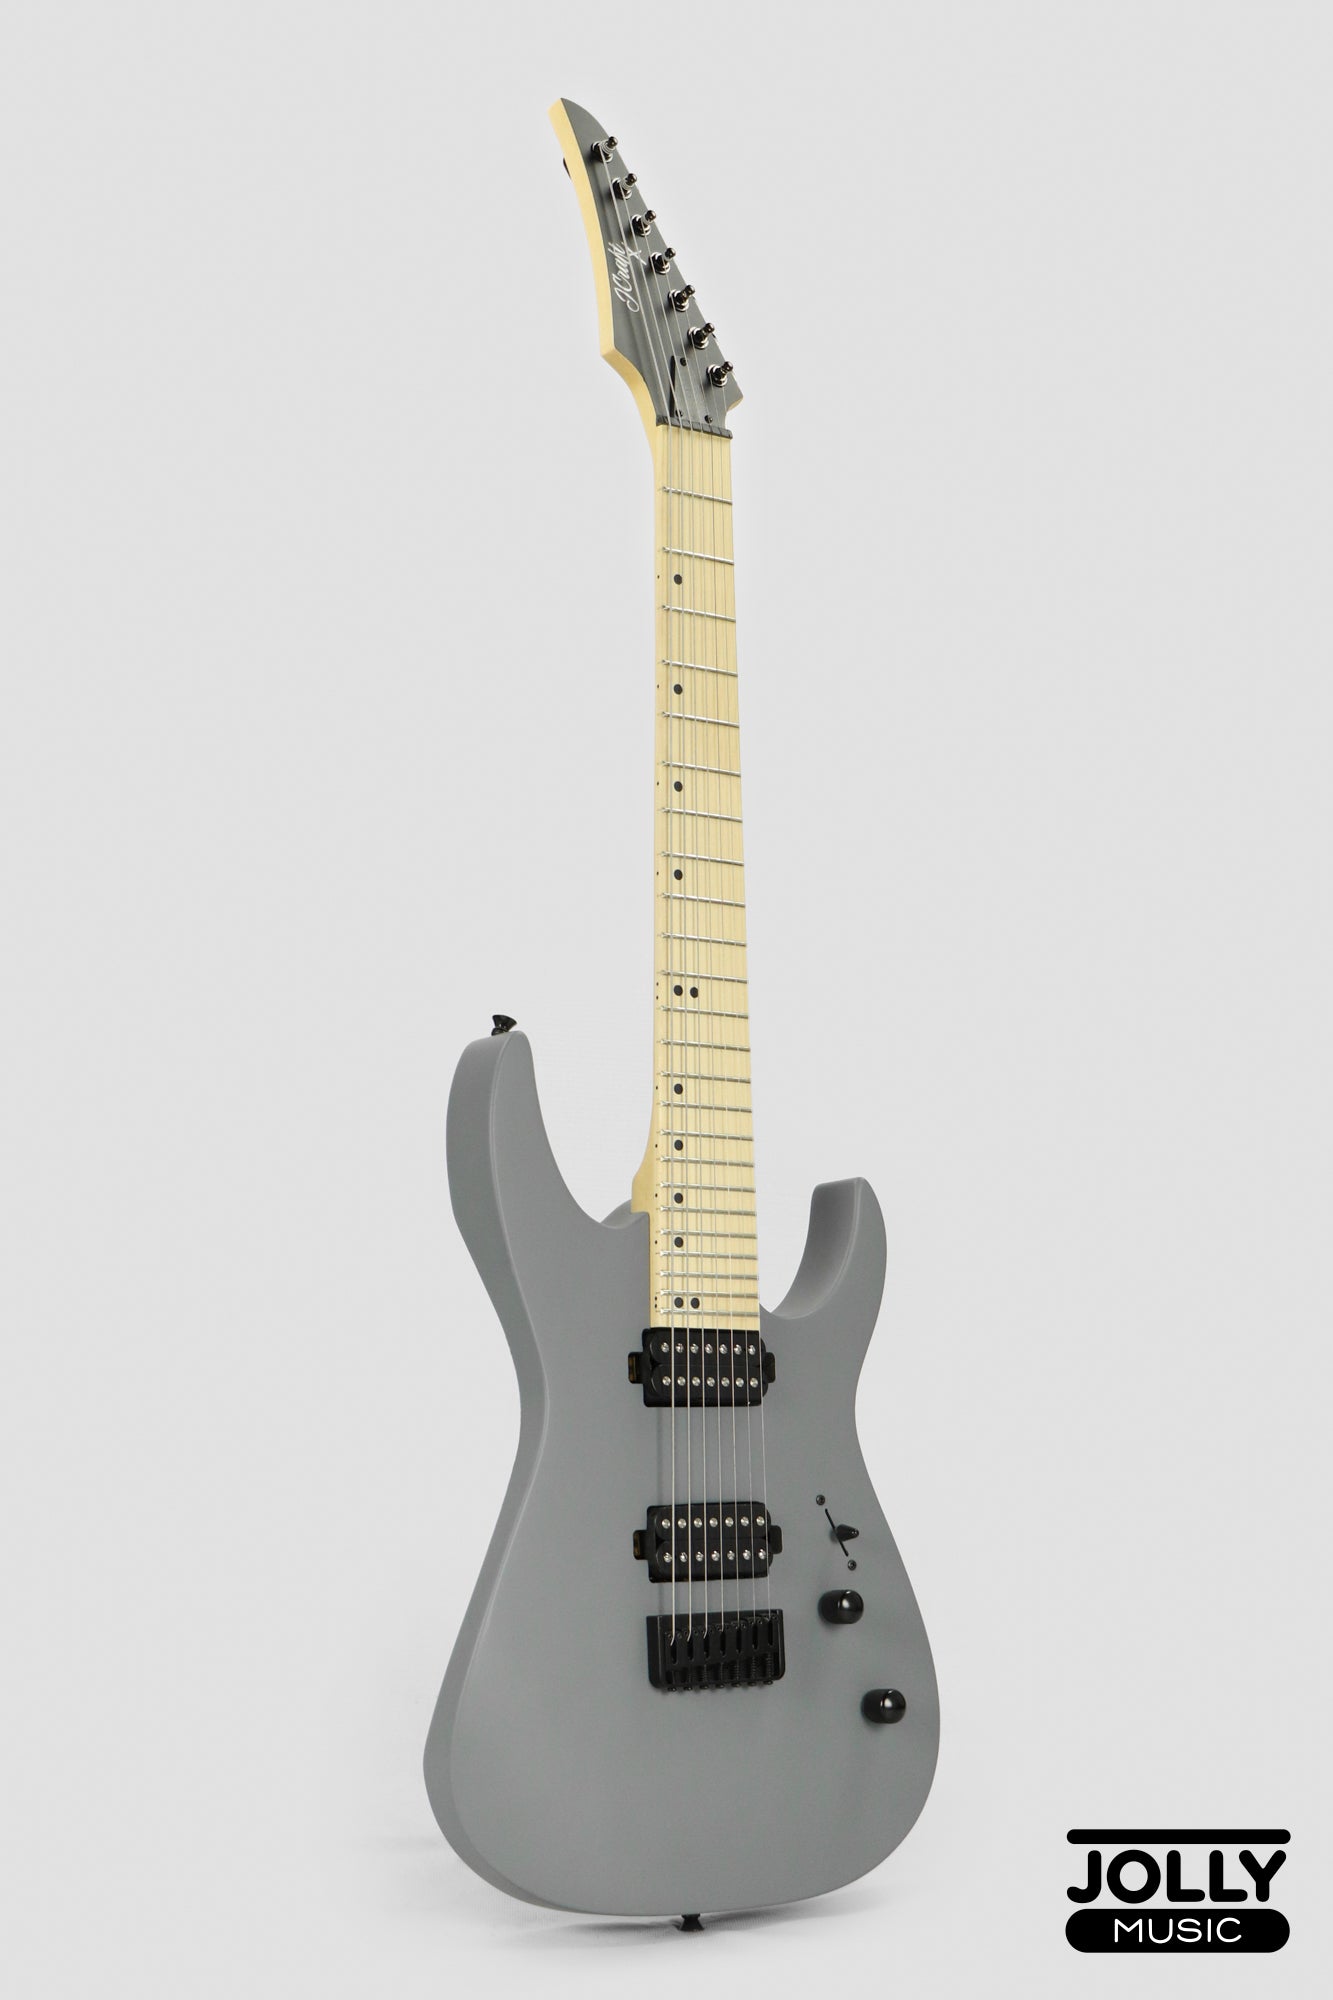 JCraft X Series Bushido BX7-1T 7-String Super S-Style Electric Guitar - Gunmetal